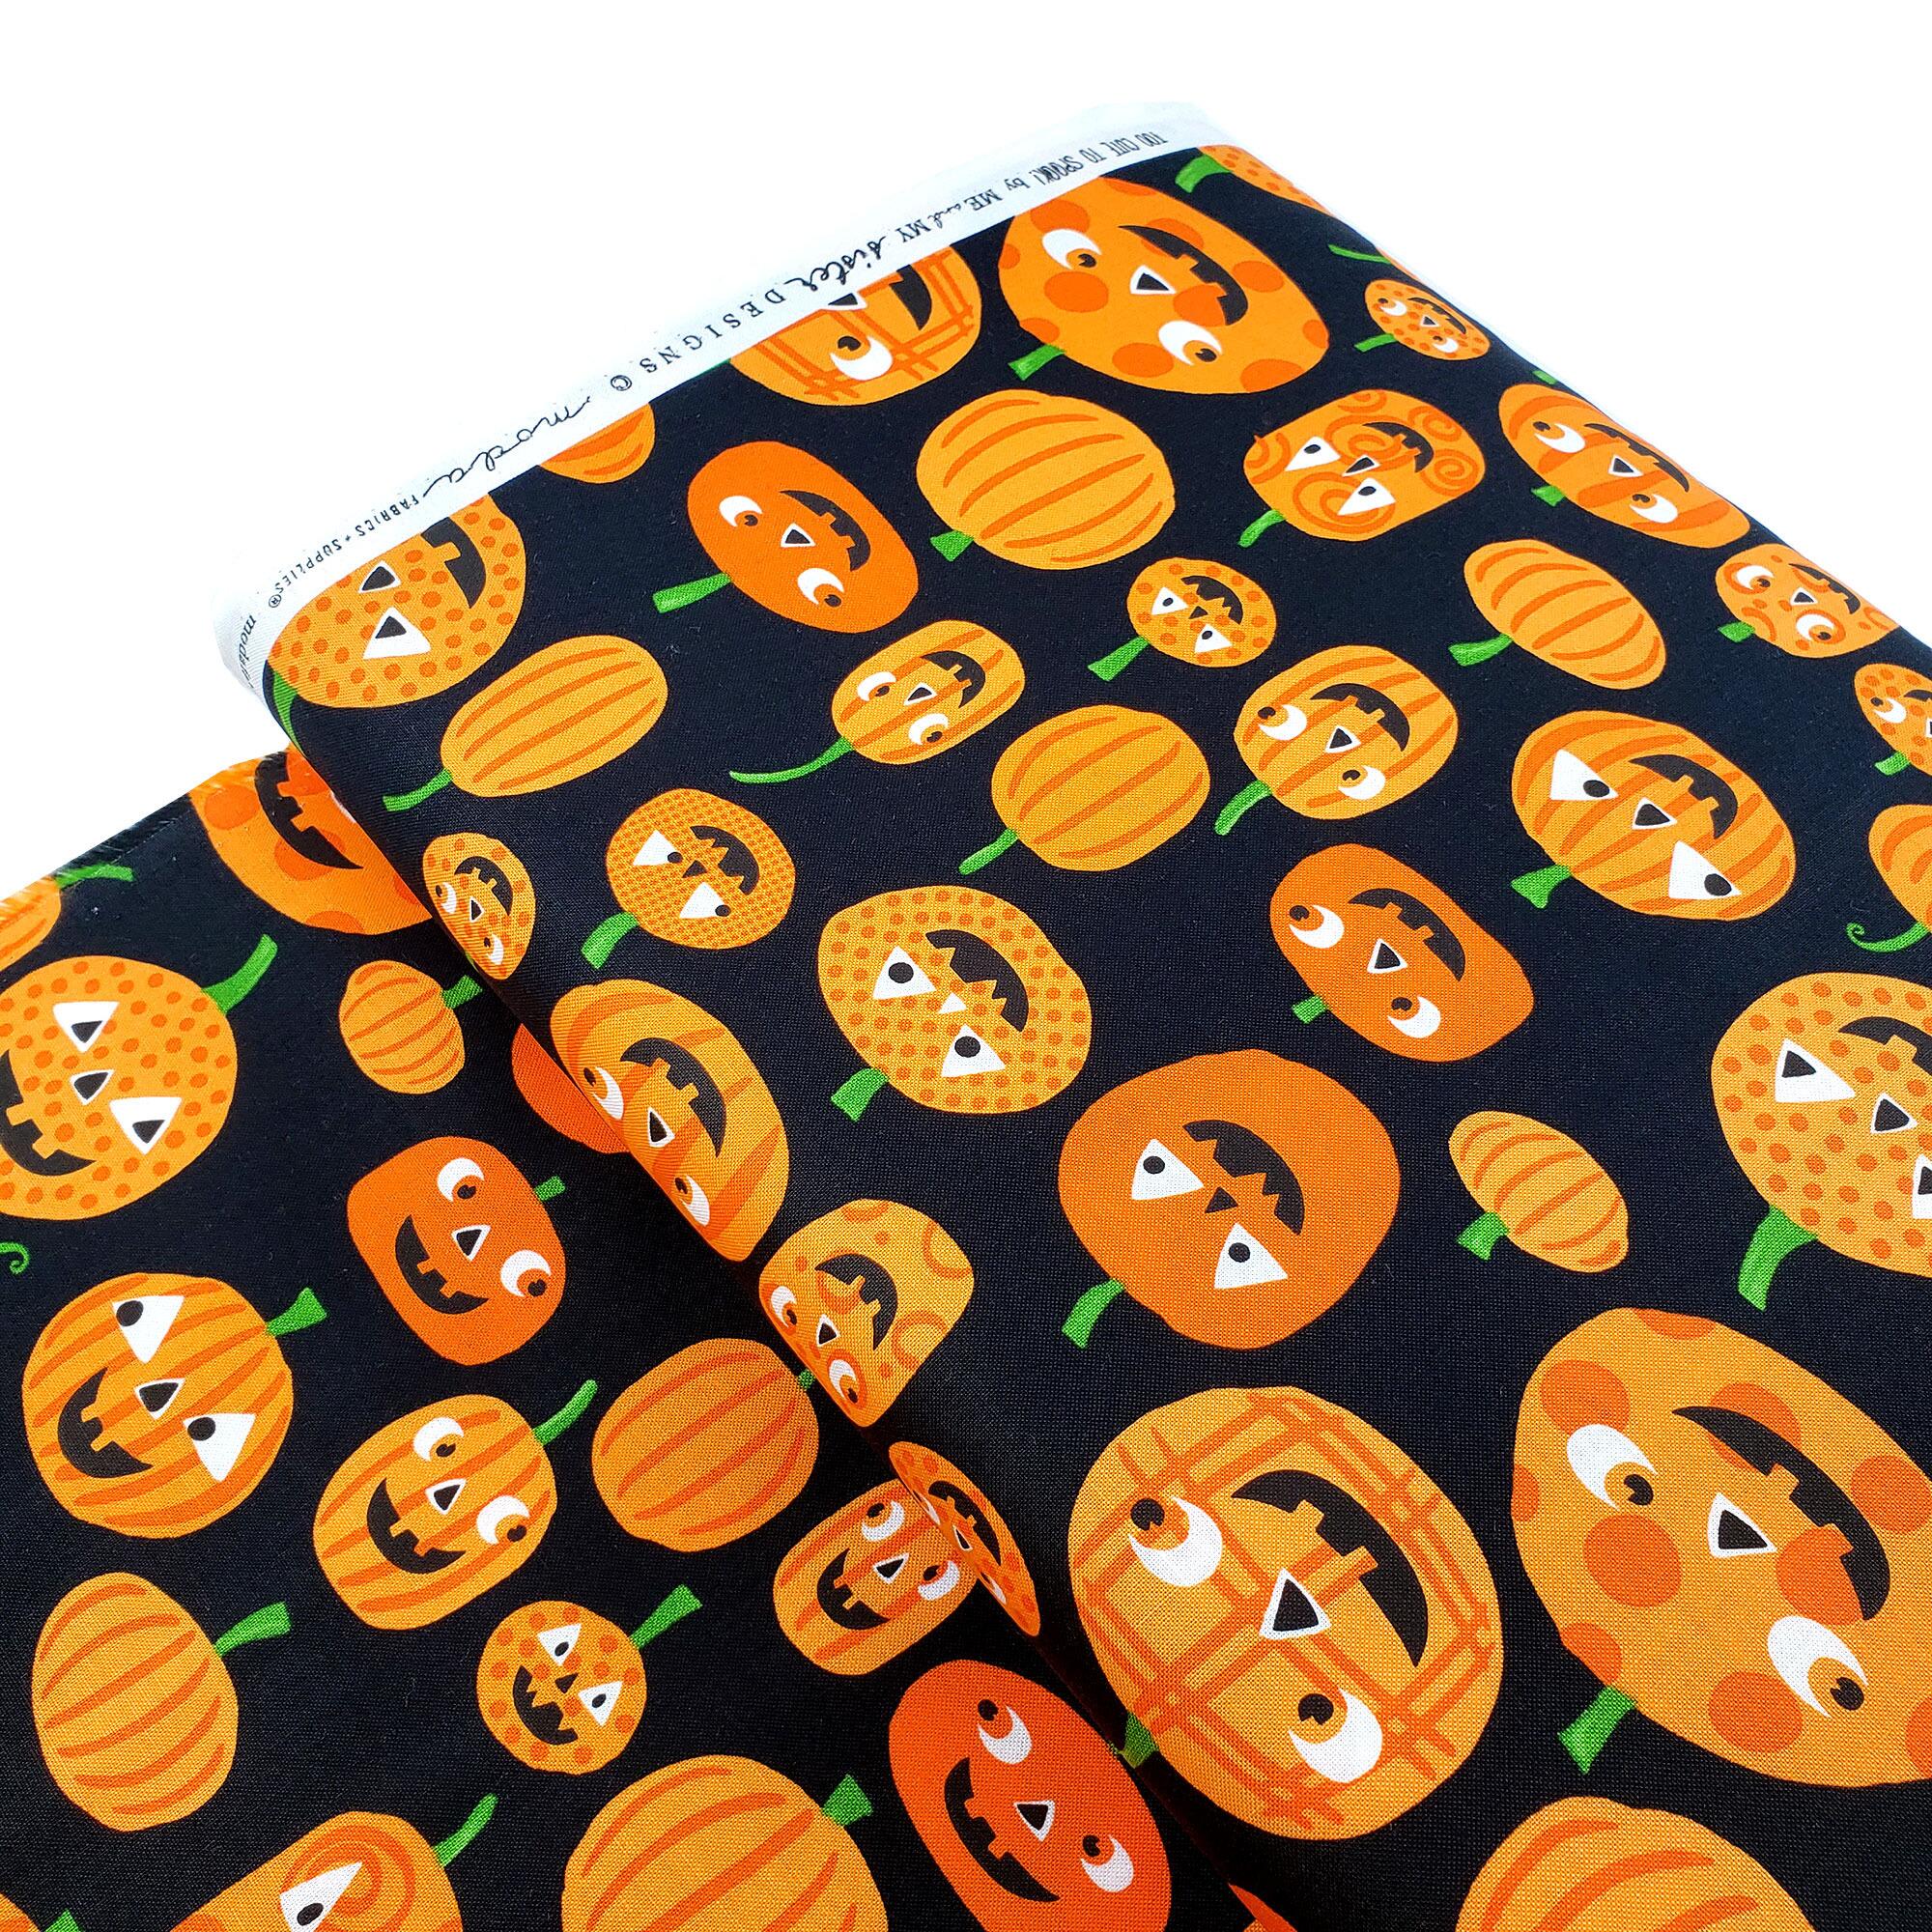 halloween fabric,moda,spooky,too cute,pumpkins,black,orange,kids,trick or treat,bag,costume,scary